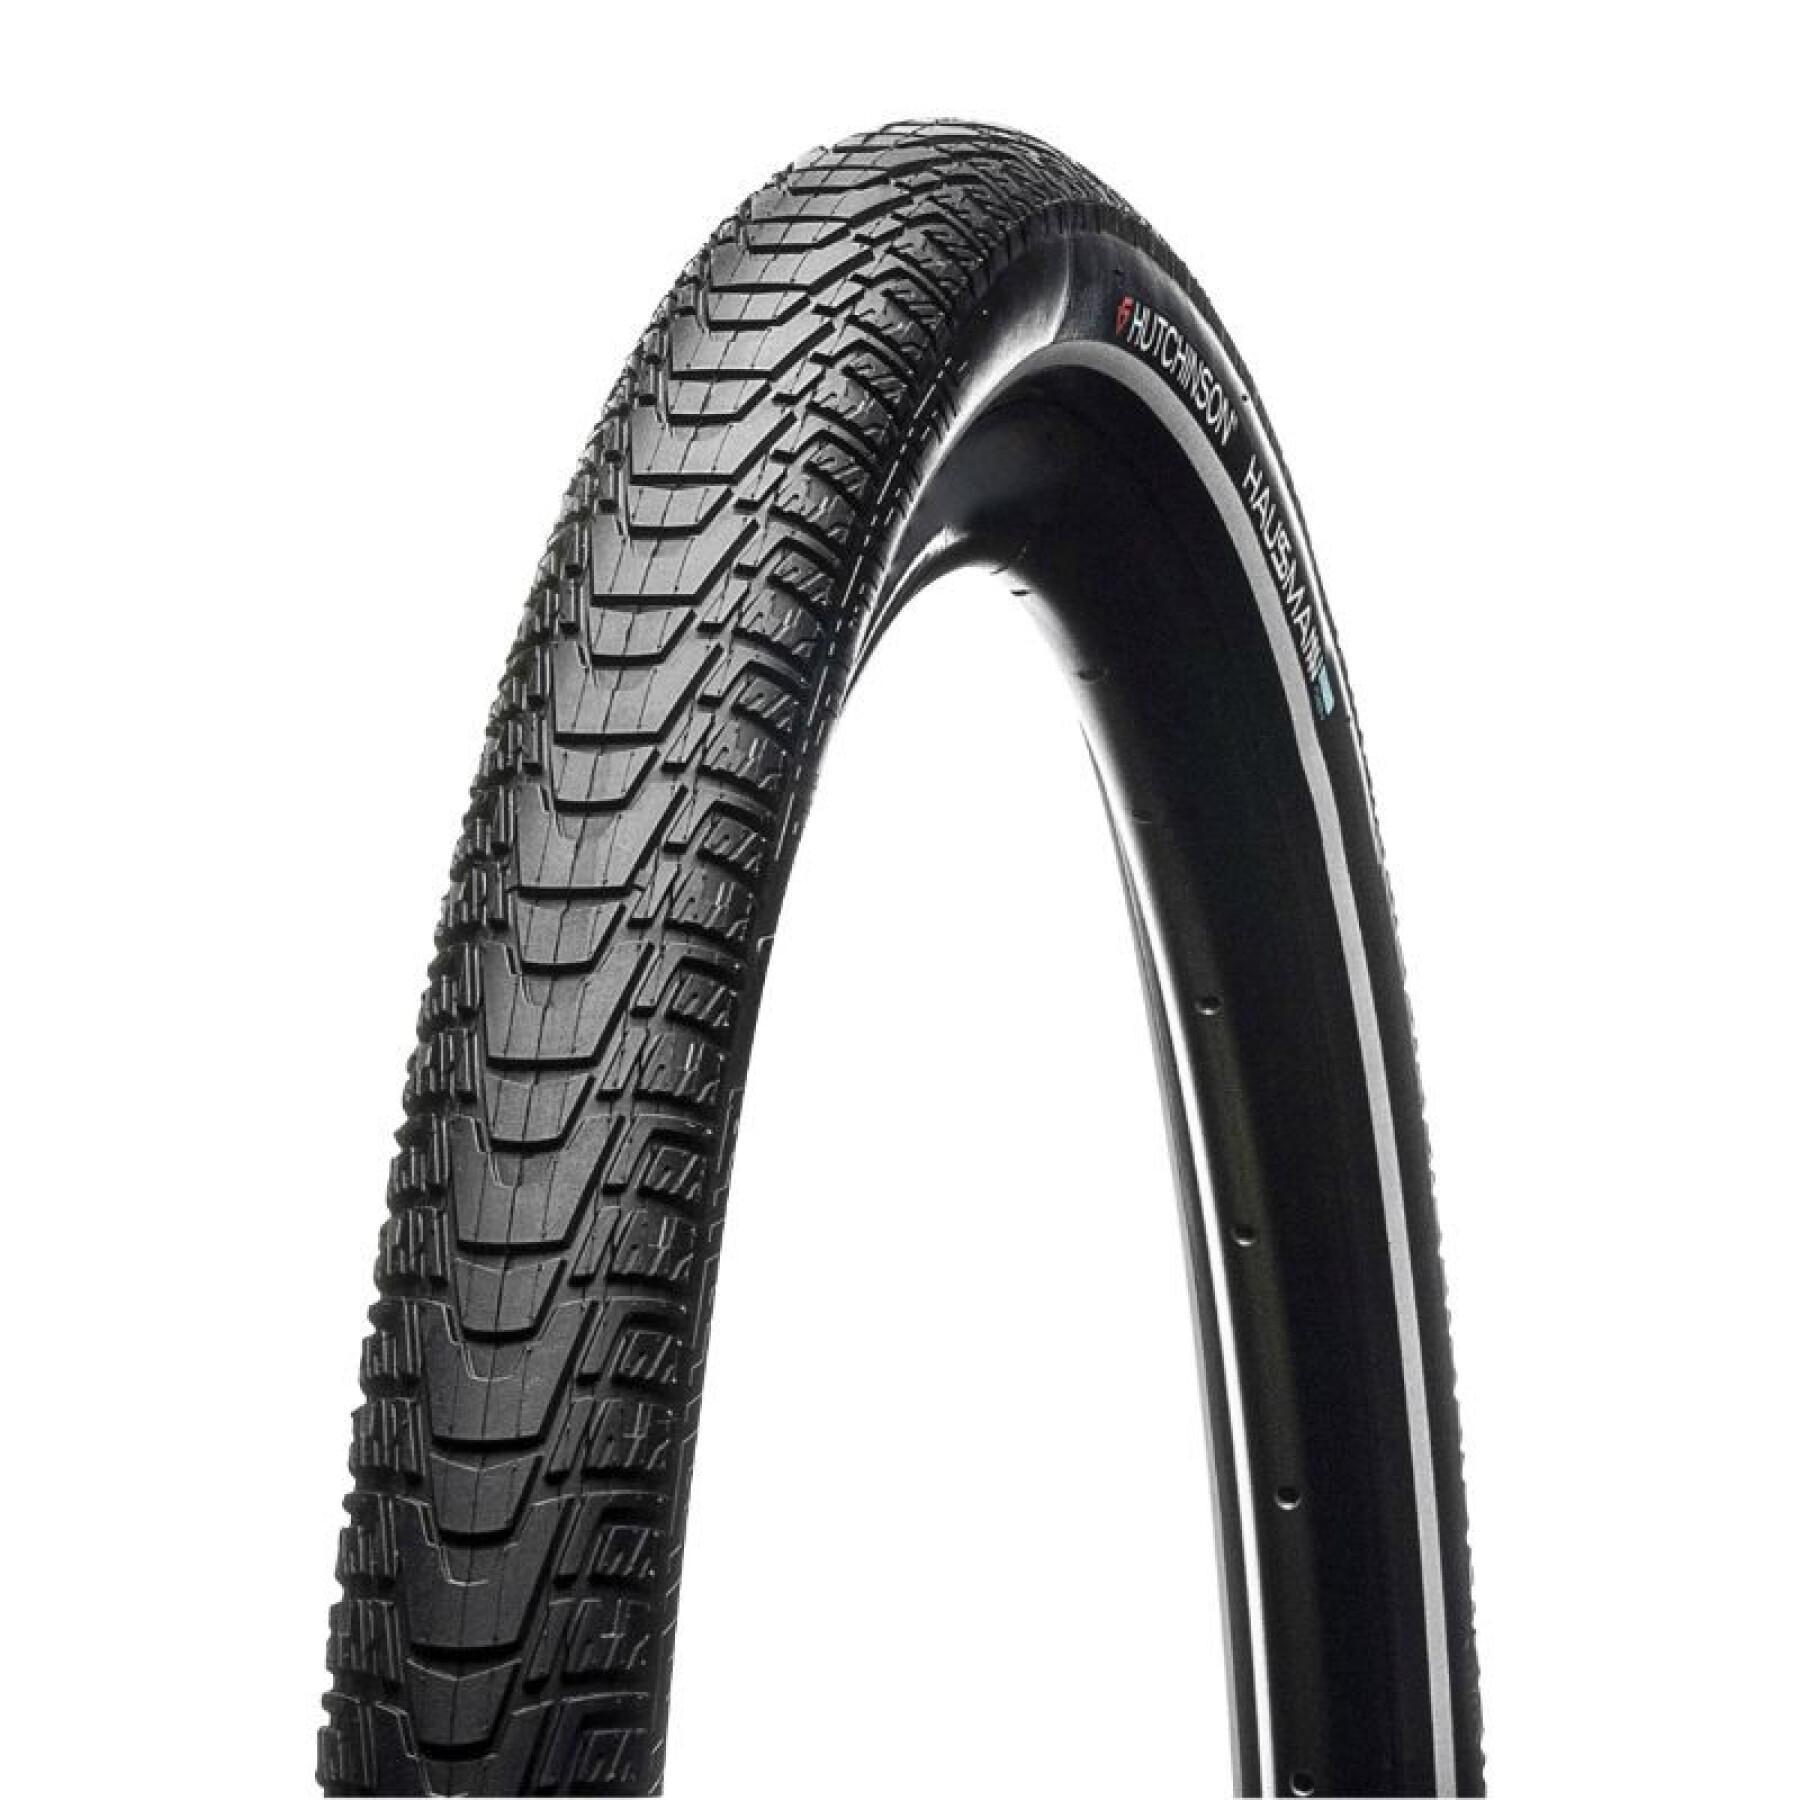 Reflex approved reinforced urban mountain bike tire Hutchinson haussmann infinity protect TR E50